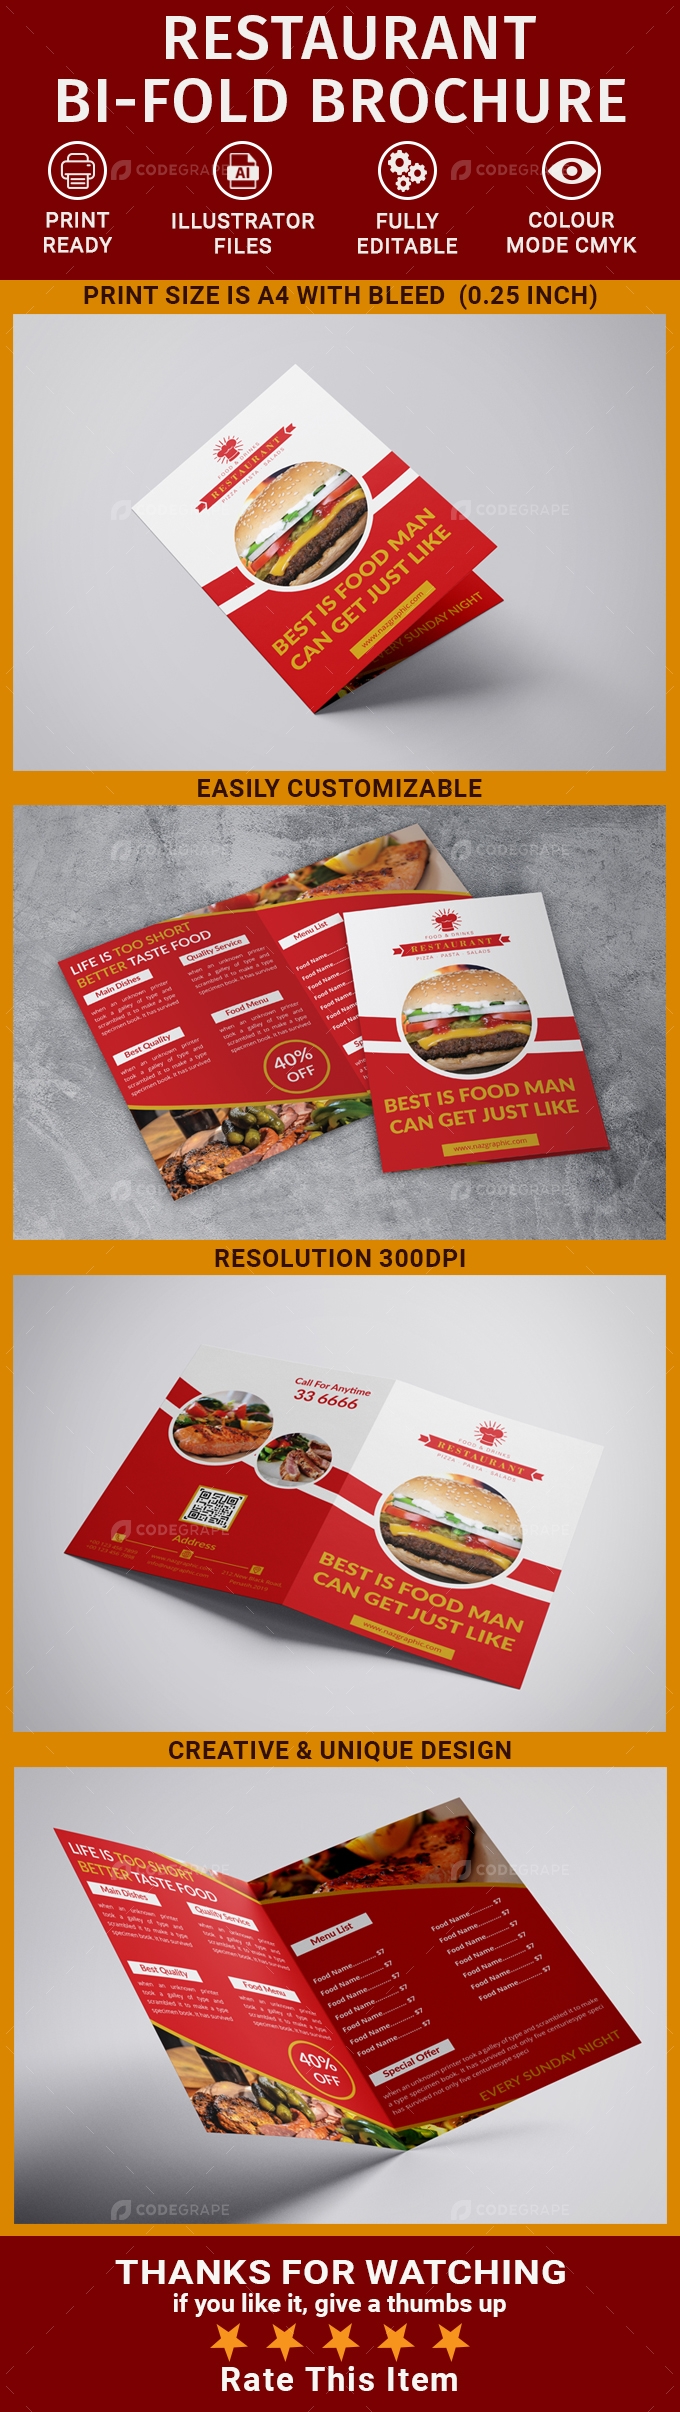 Restaurant Bi-Fold Brochure